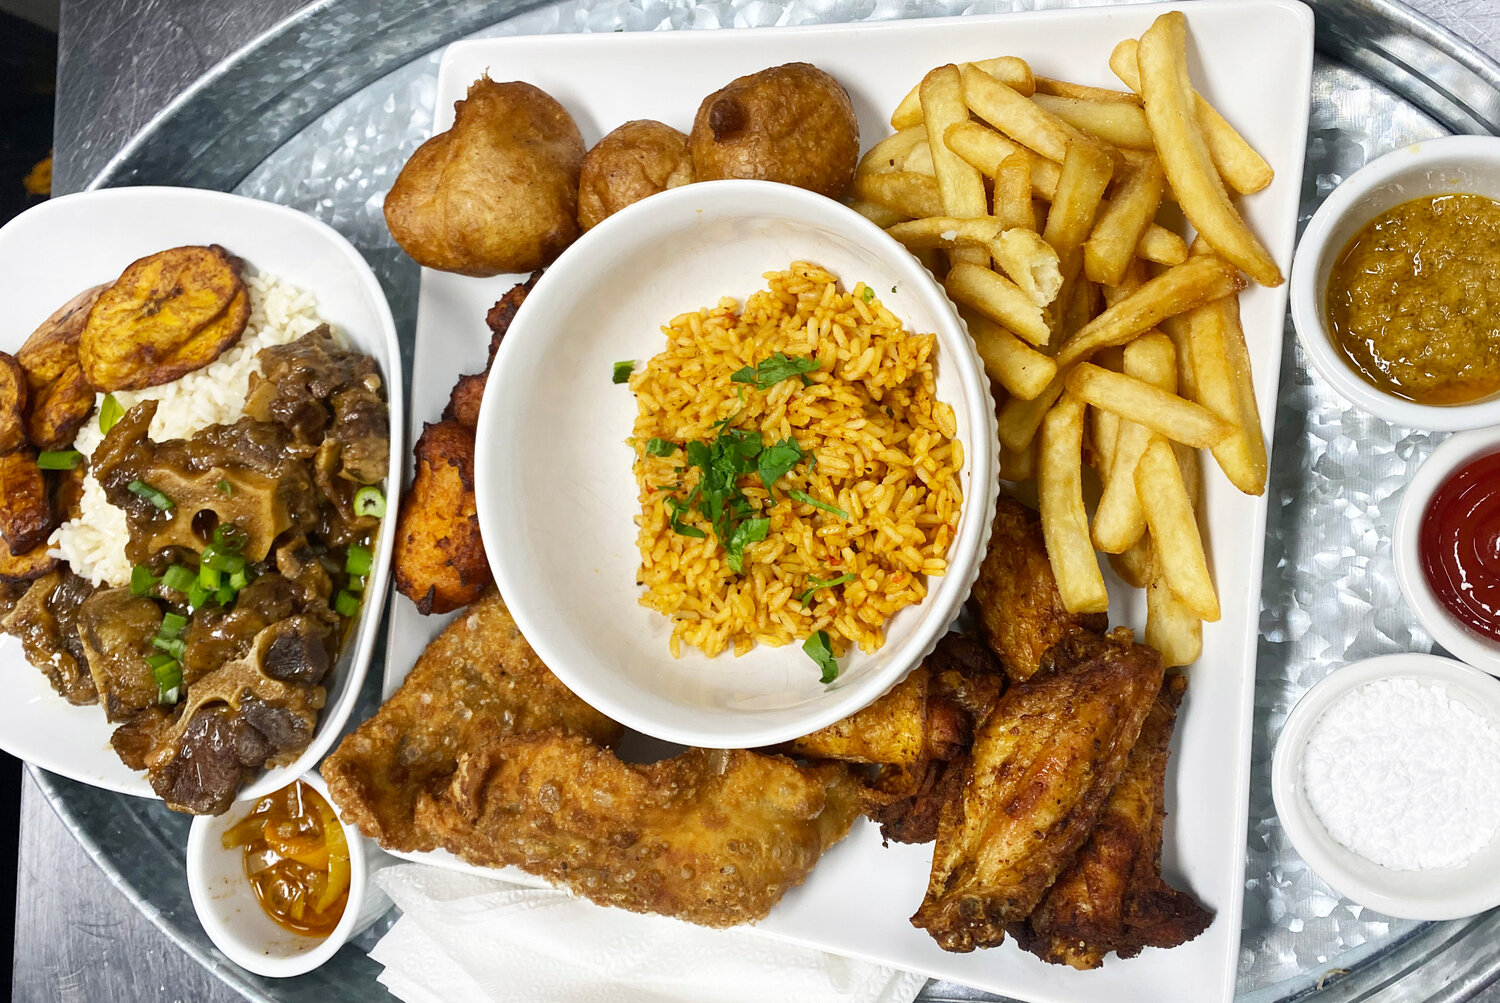 A platter of West African eats from Talkin’ Tummy